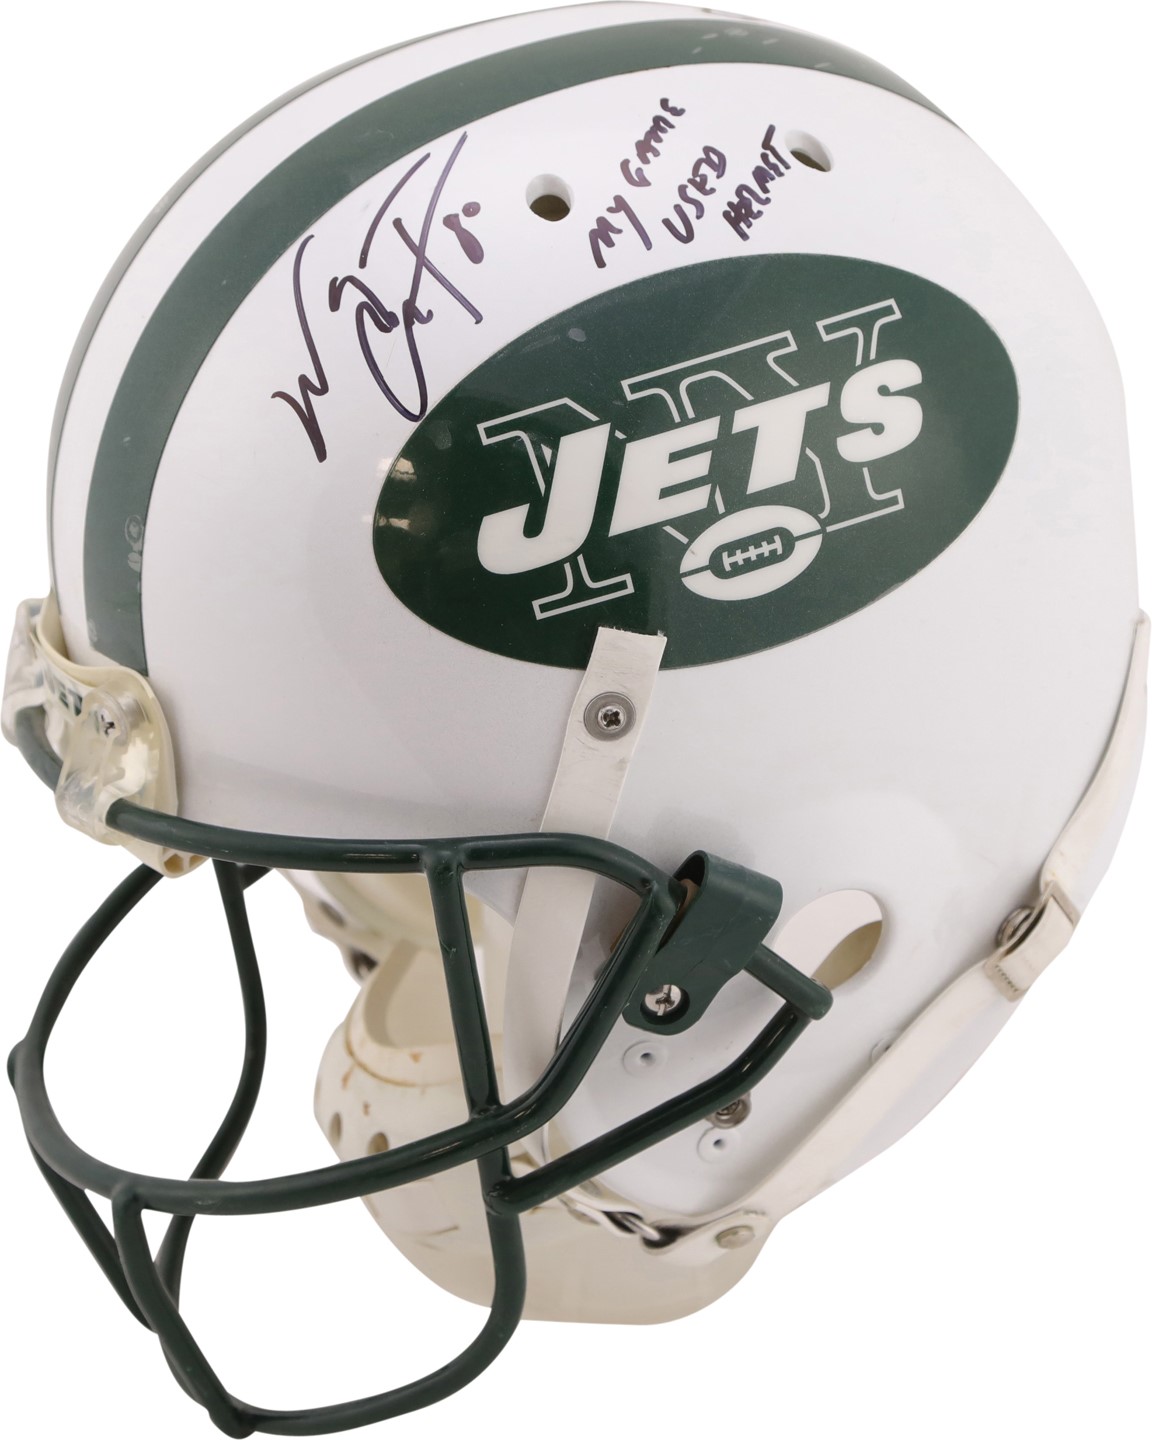 - 2005 Wayne Chrebet New York Jets Final Season Signed Game Worn Helmet - Photo-Matched to Chrebet's Final Game! (Chrebet LOA) (PSA)